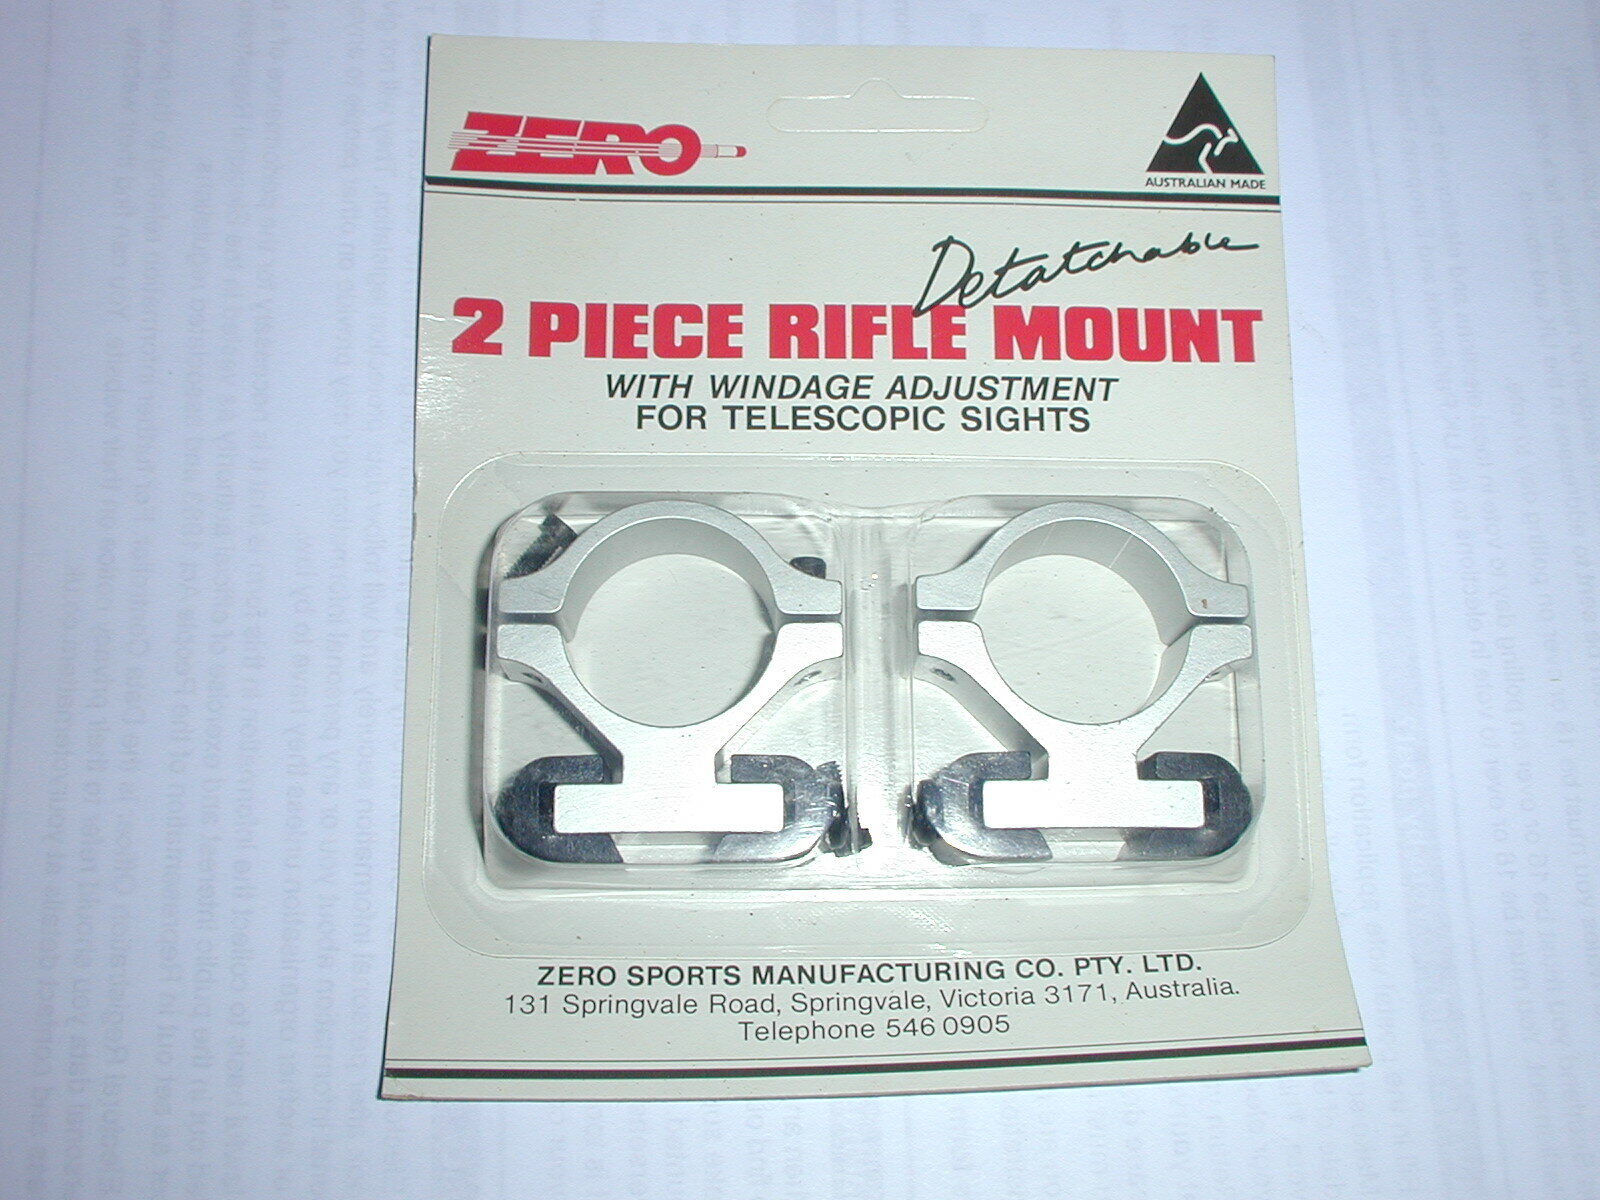 ZERO Detachable 2 piece Rifle Mount with windage adjustment for telescopic sight